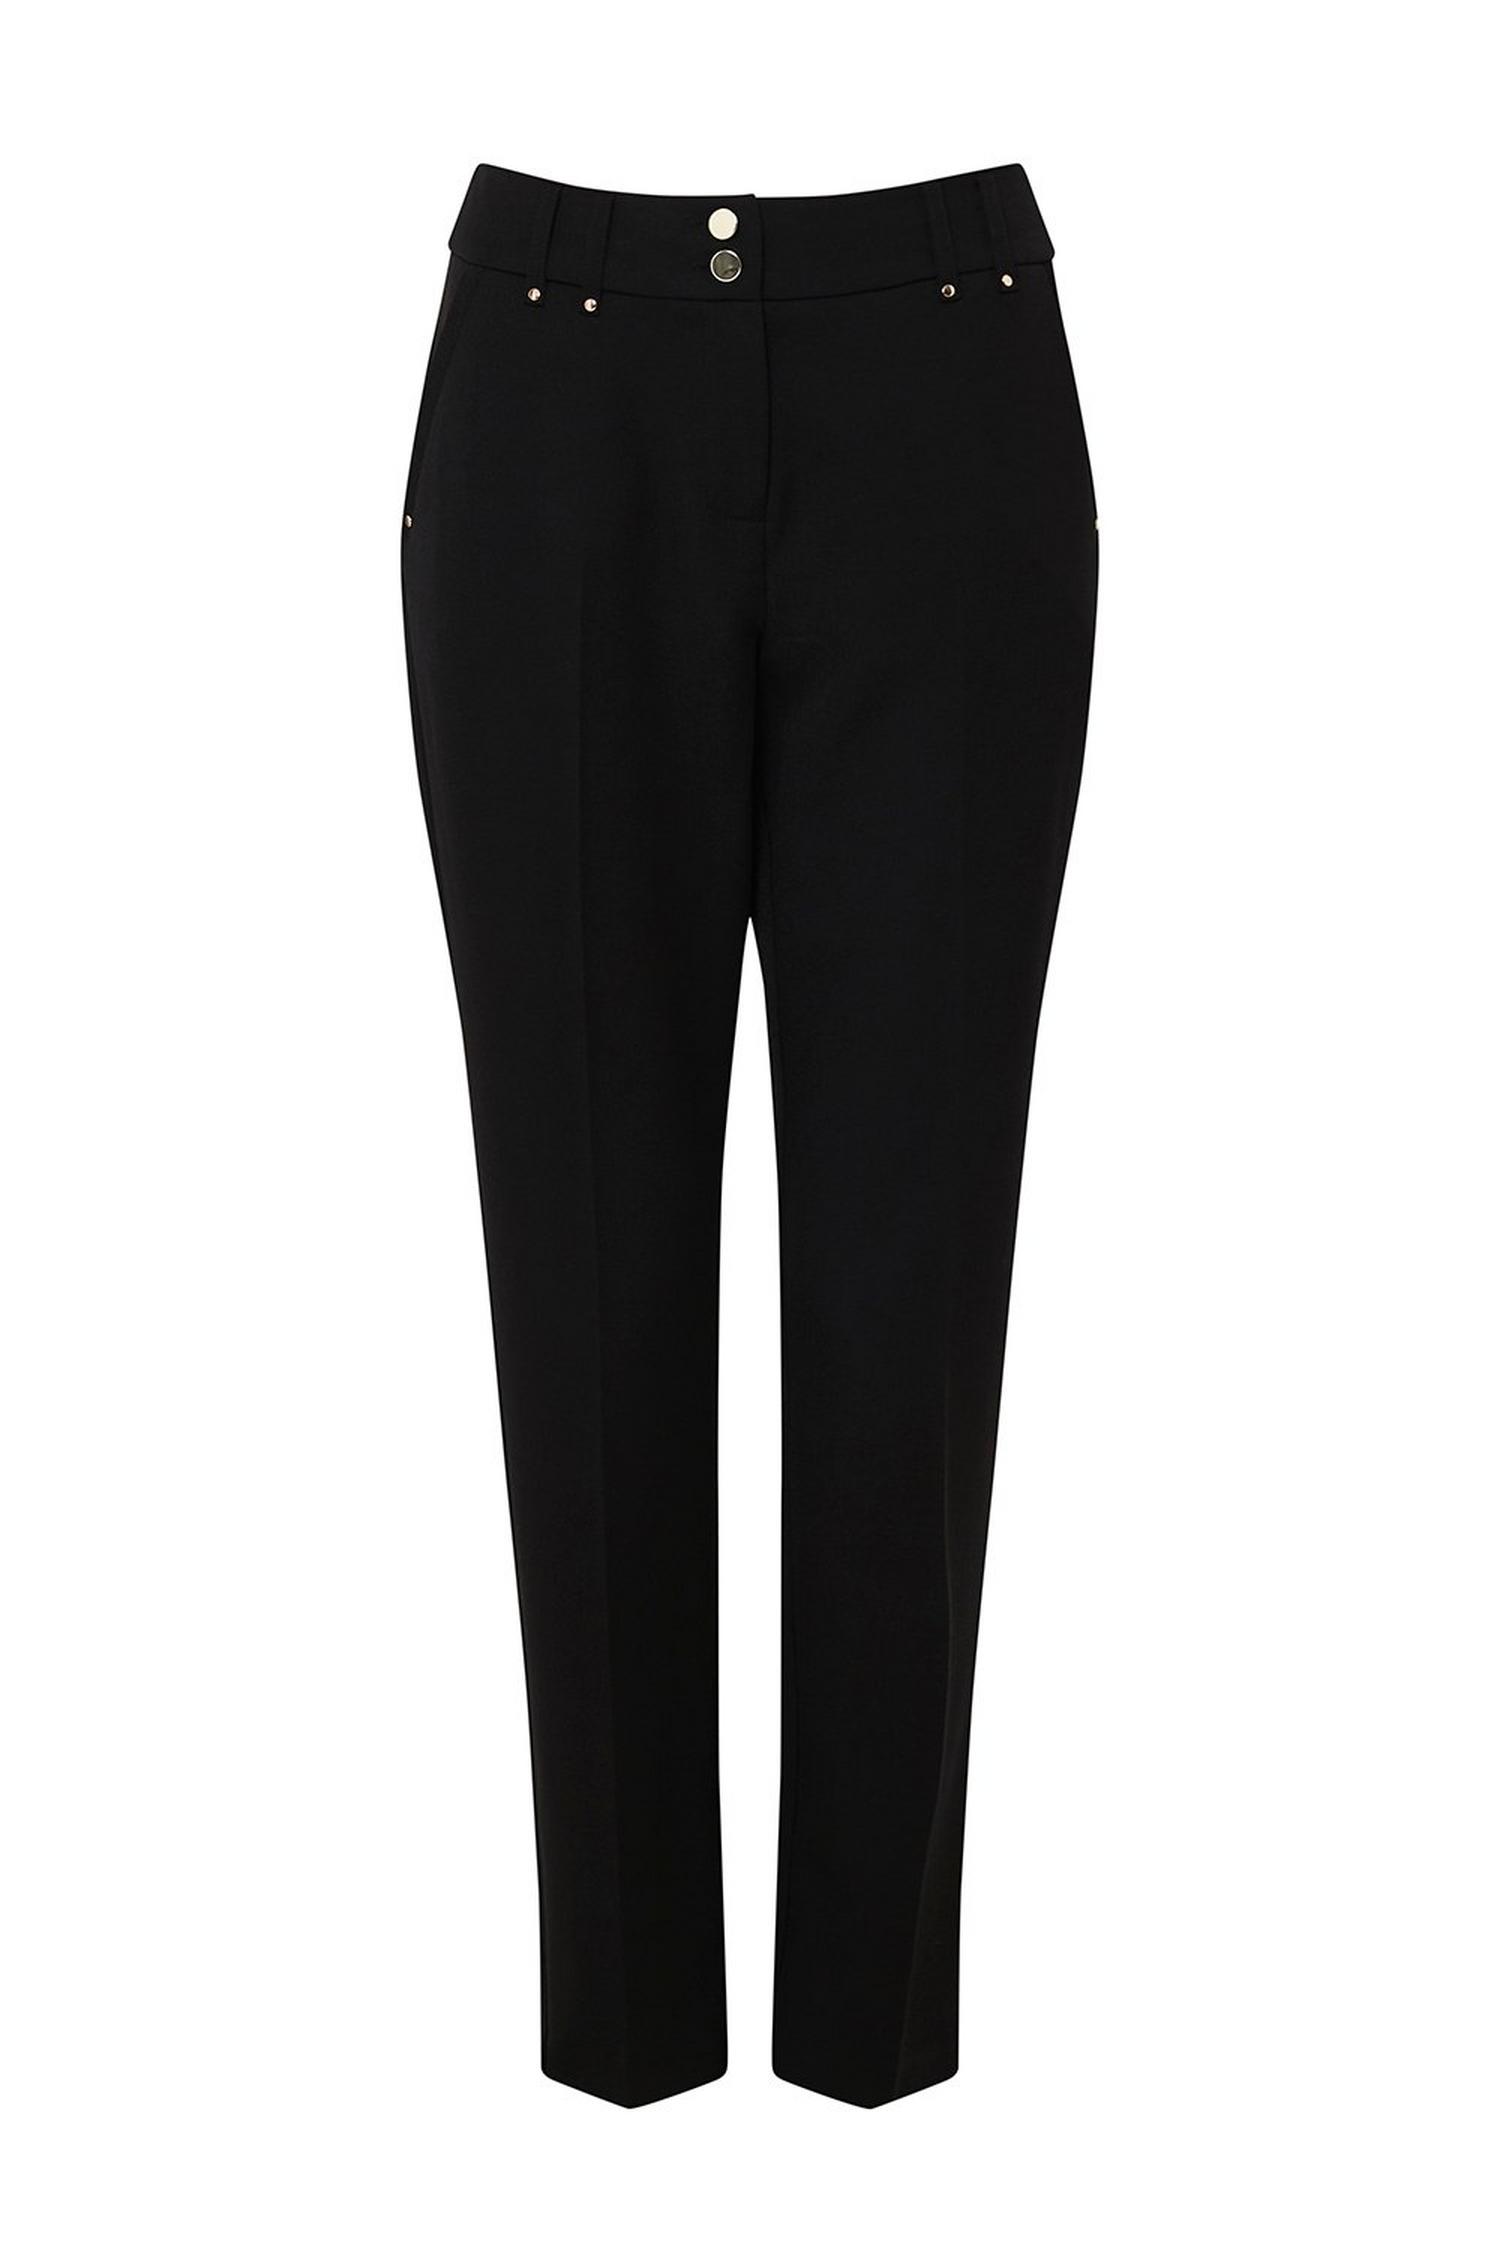 Black Stud Detail Tapered Trousers | Wallis UK